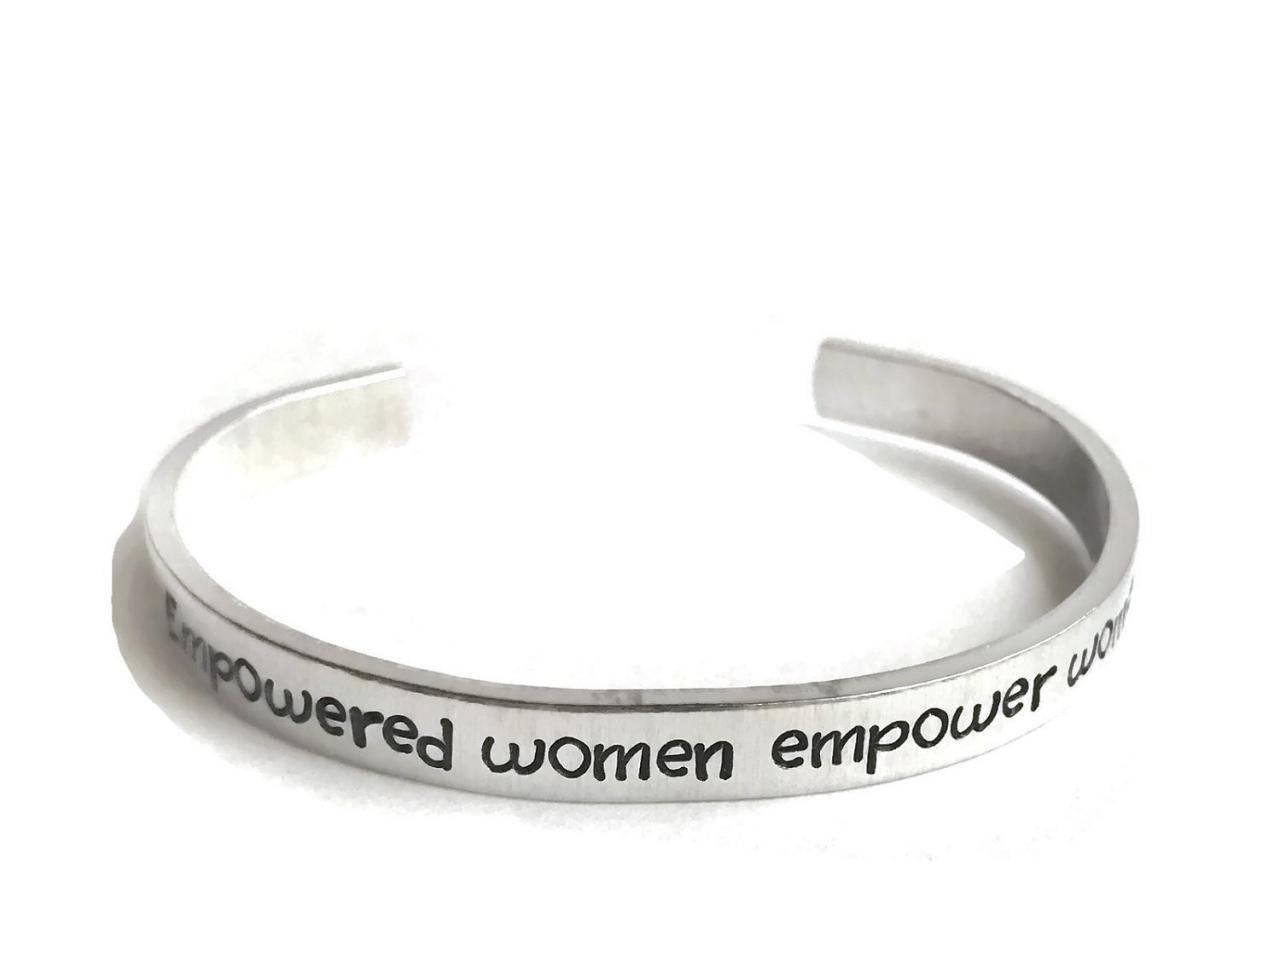 Empowered Women Empower Women Metal Stamped Aluminum Cuff Bracelet // Political Statement Feminist Feminism